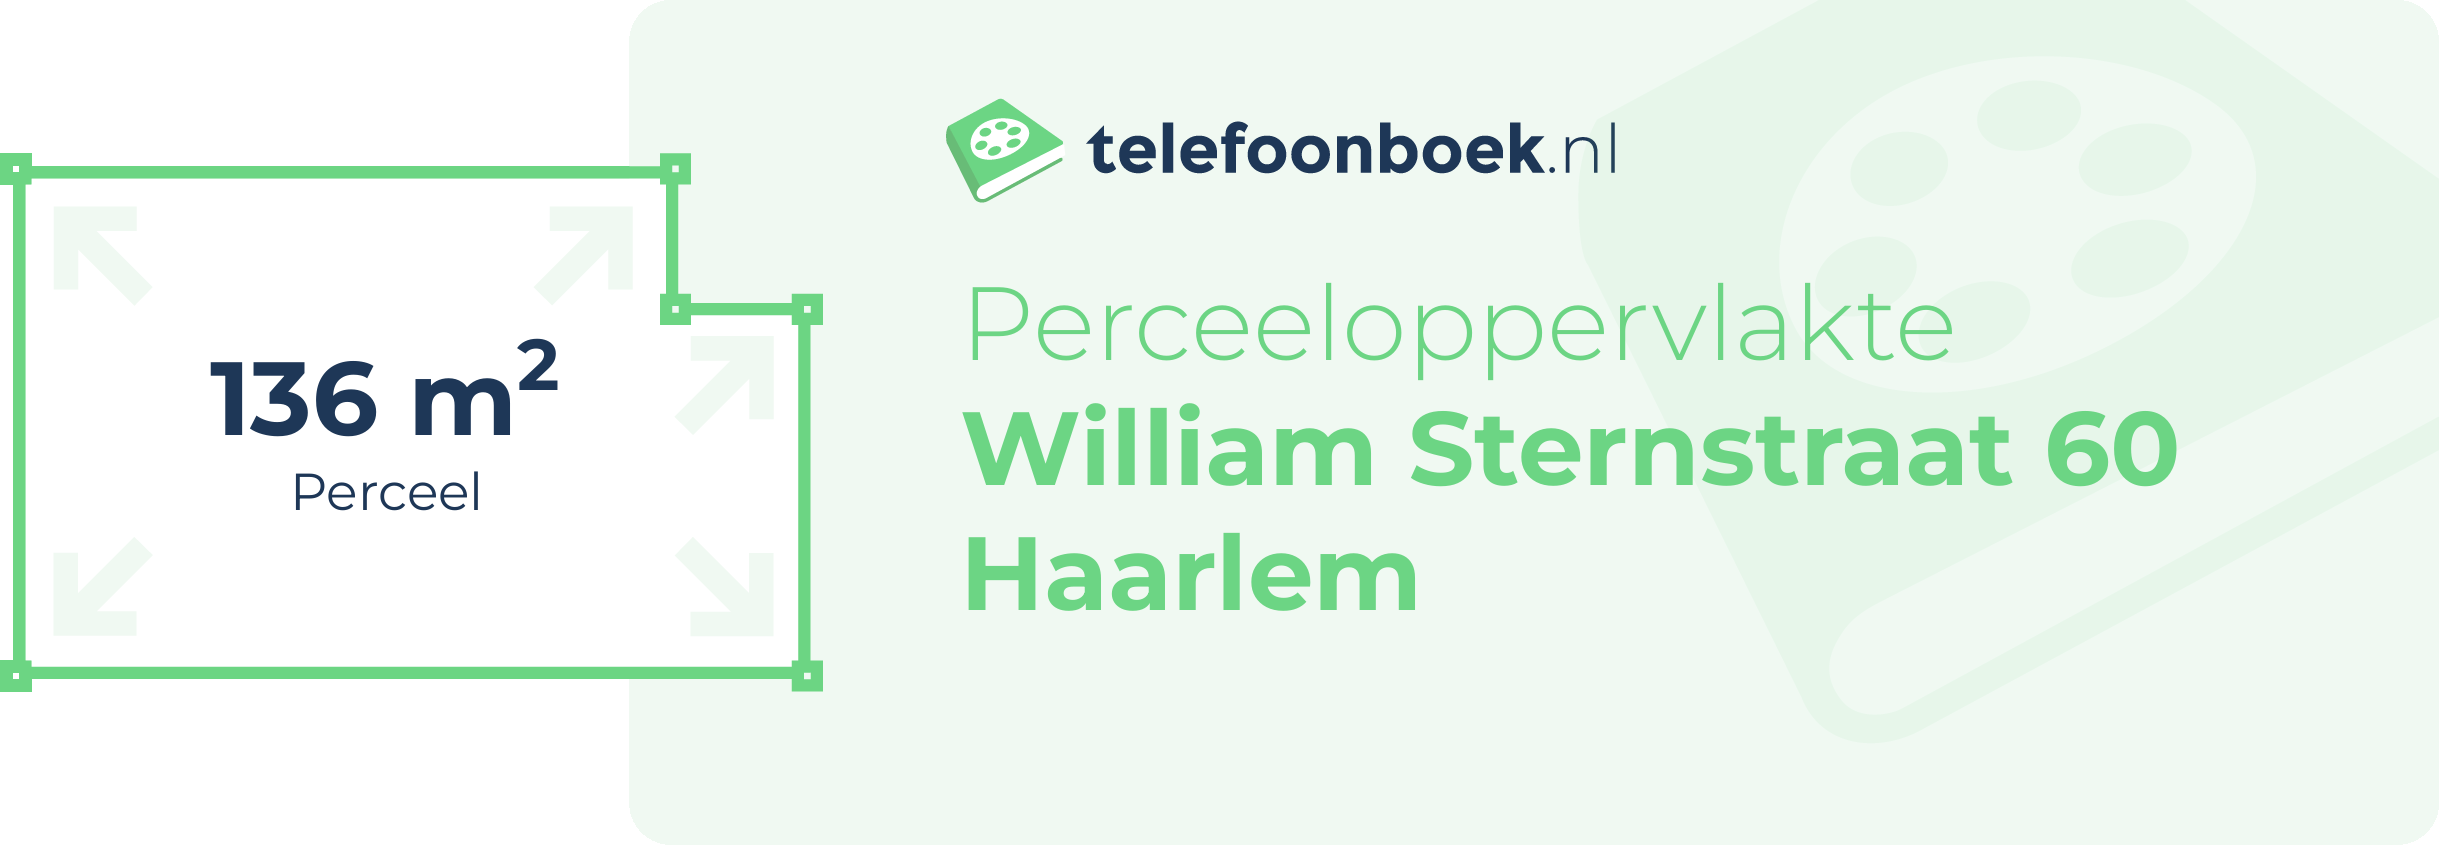 Perceeloppervlakte William Sternstraat 60 Haarlem